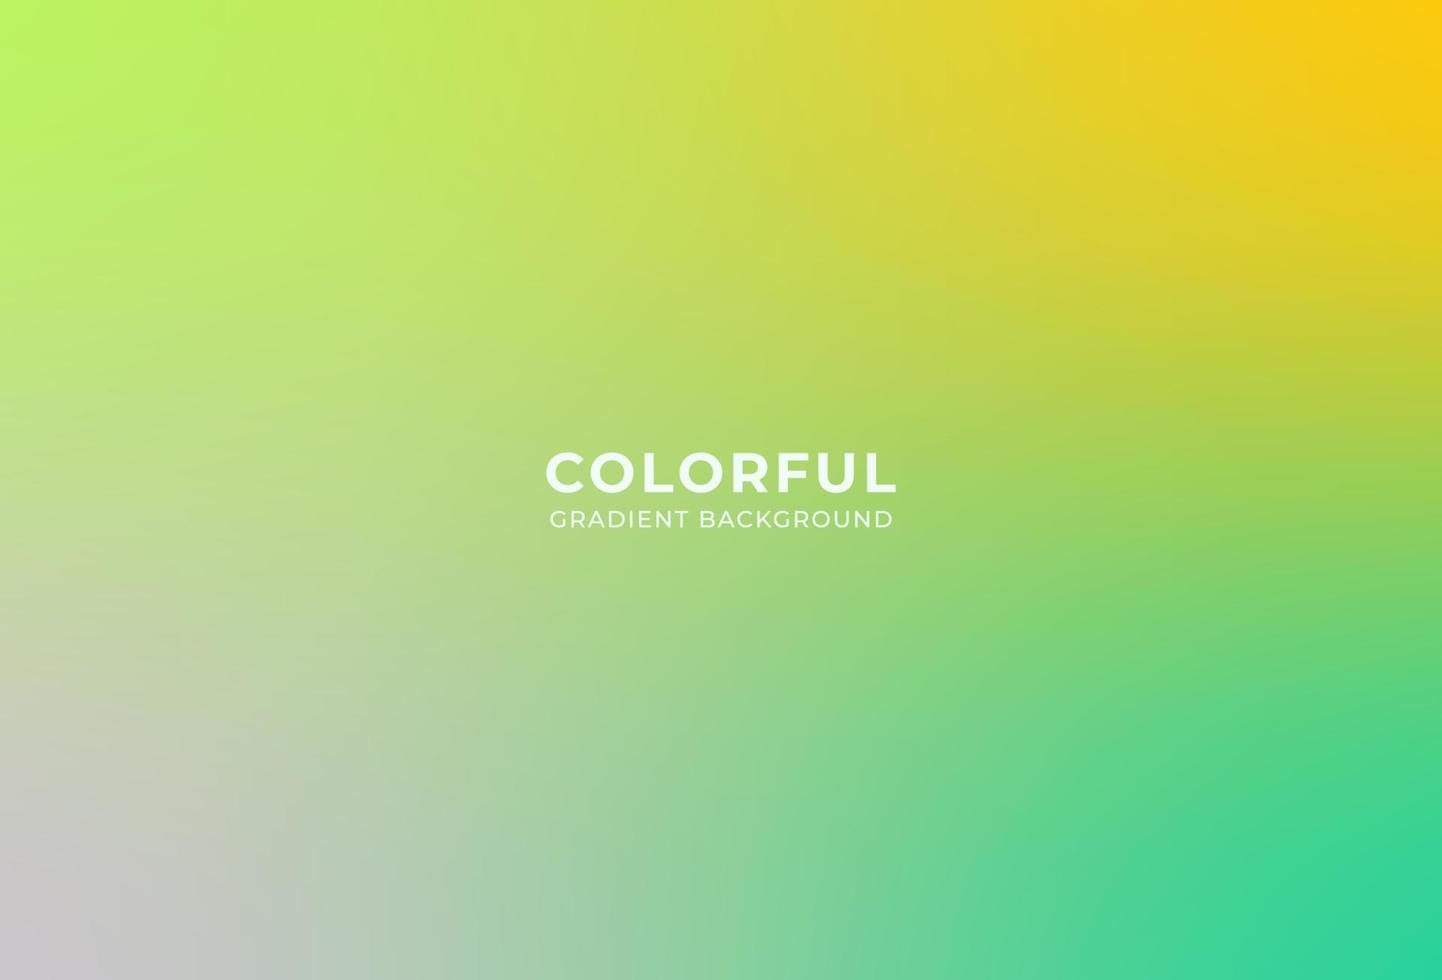 vetor de design de fundo gradiente colorido abstrato